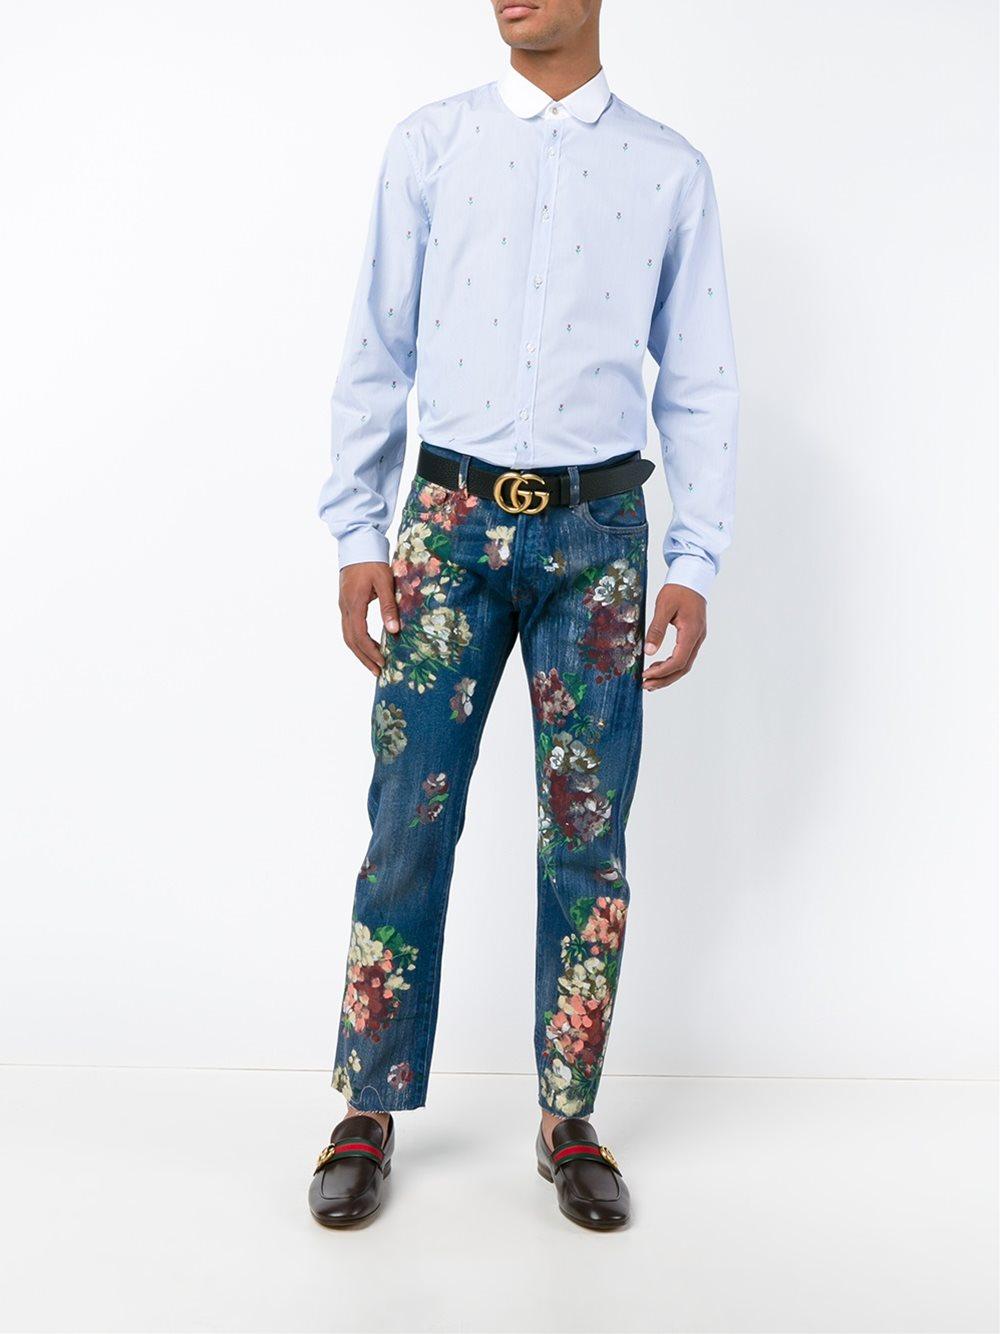 gucci floral jeans mens